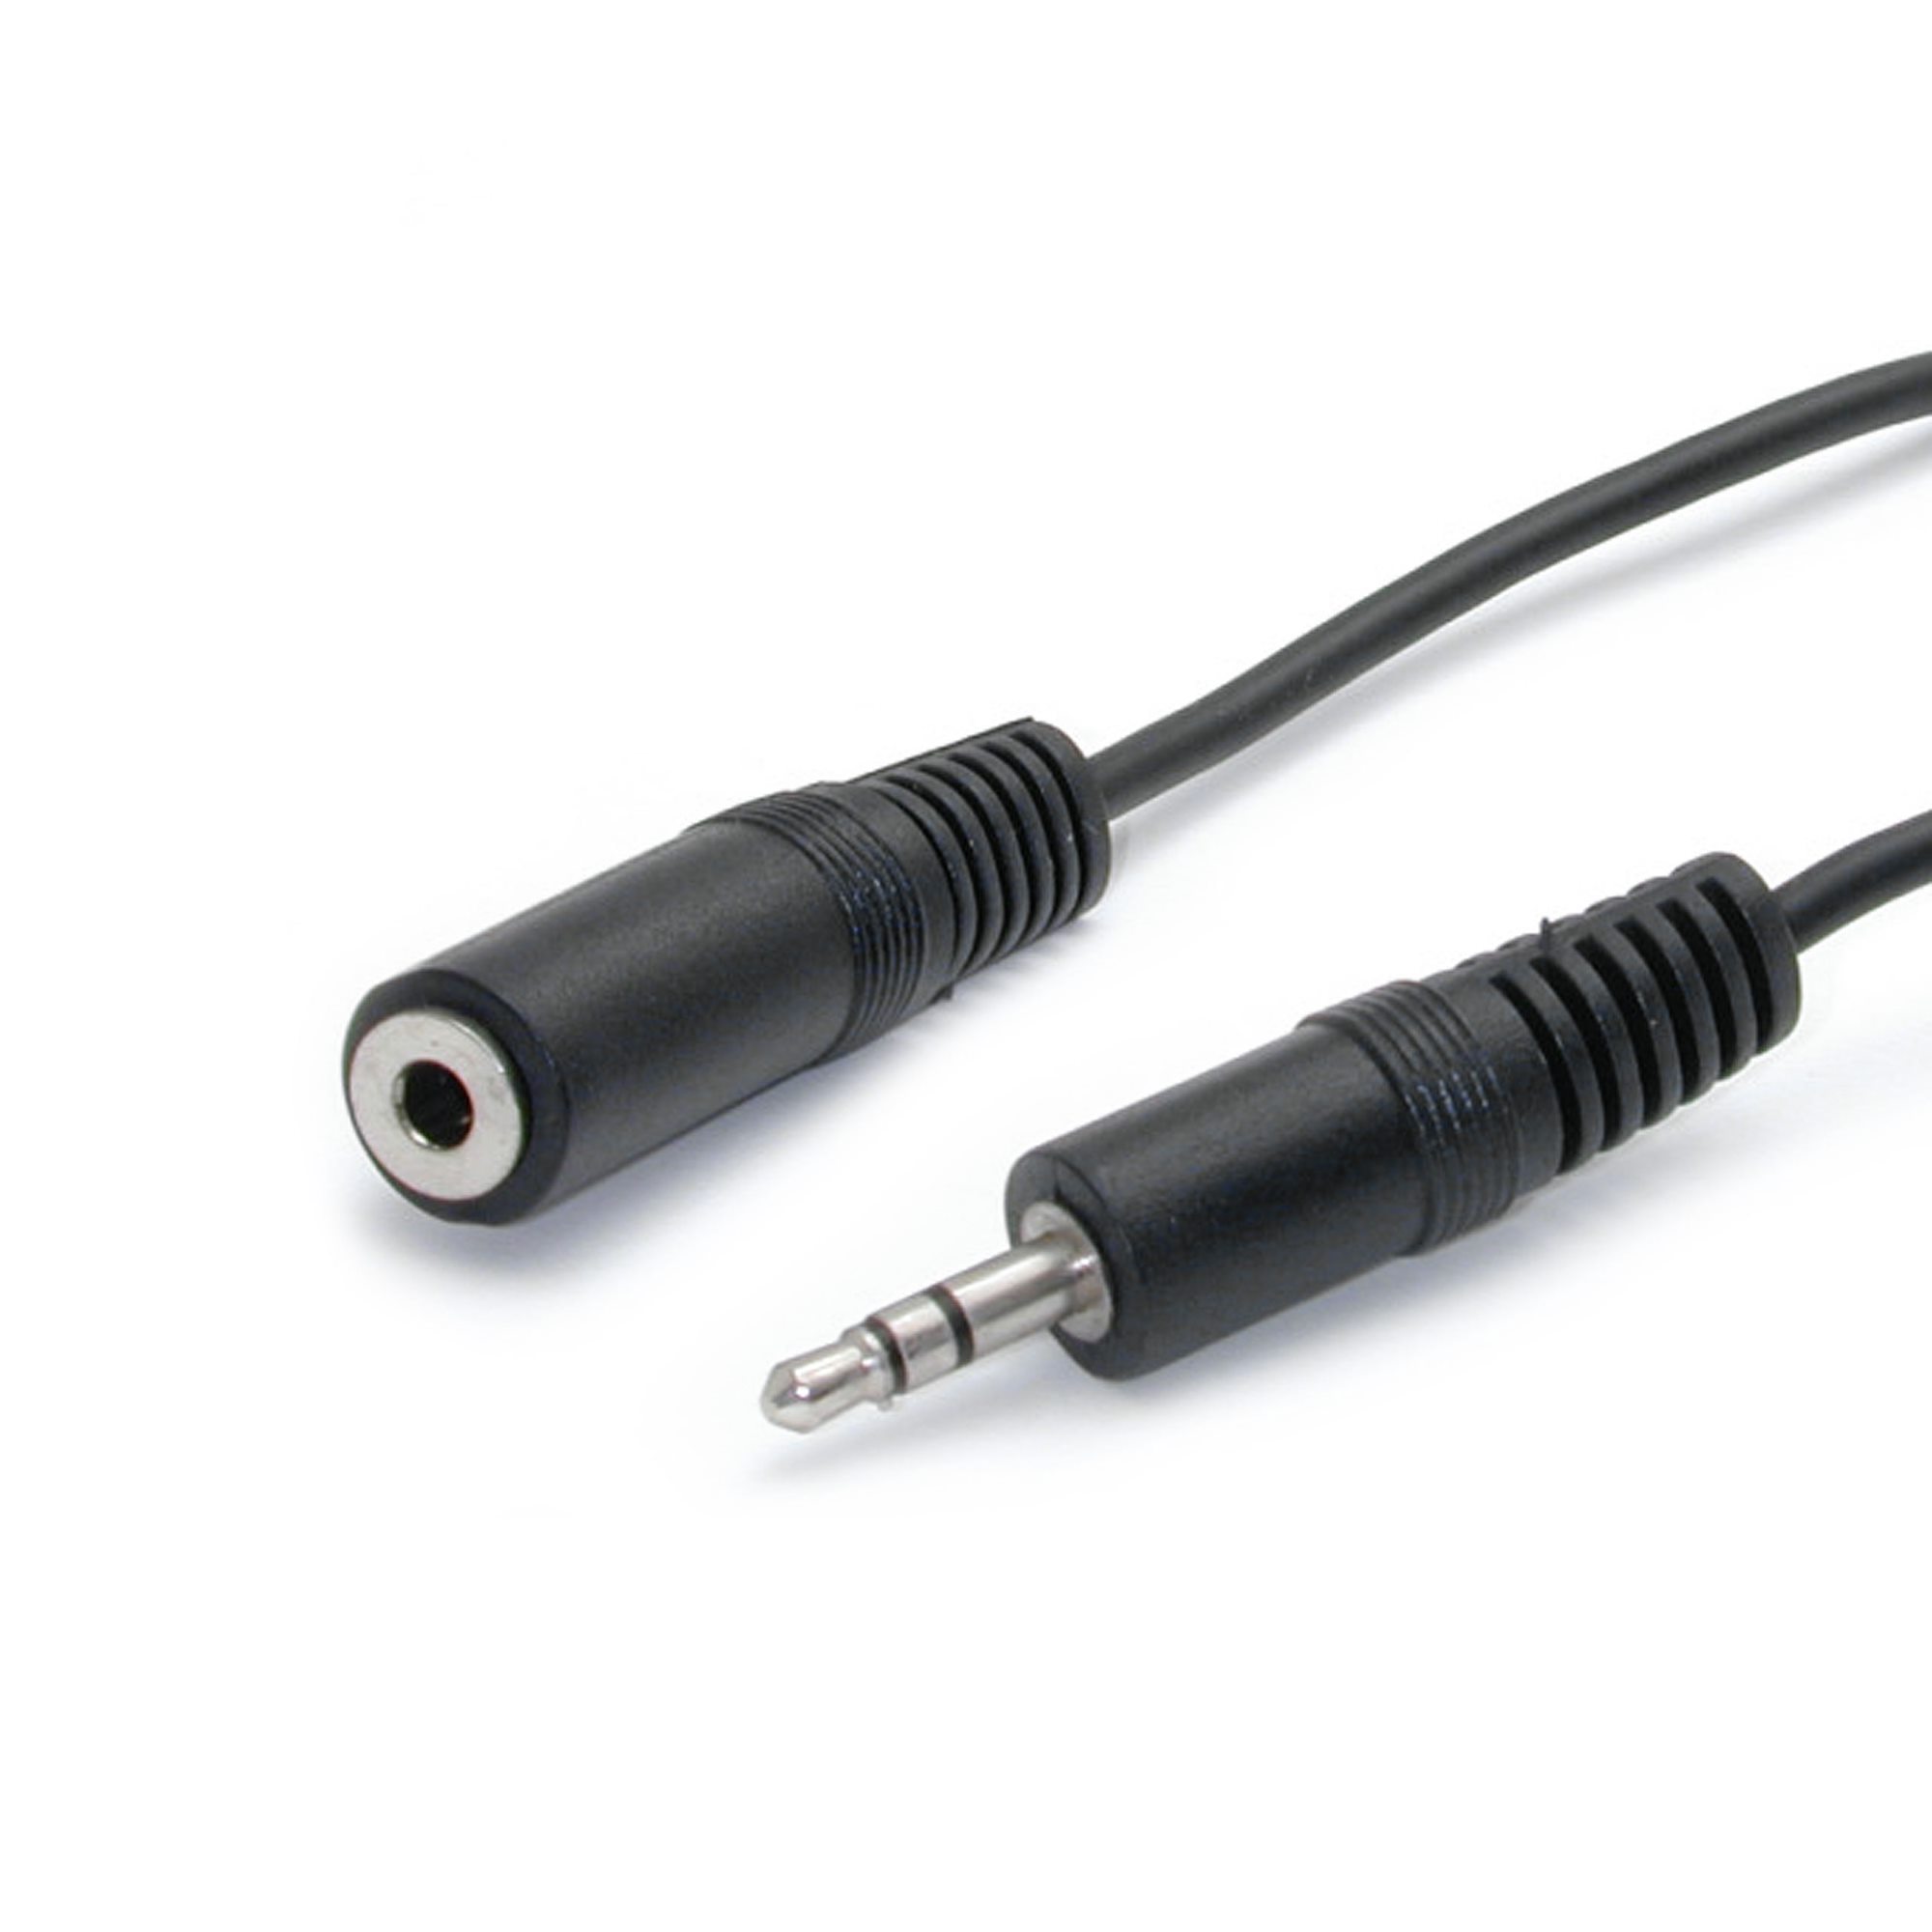 StarTech.com Cable de 1m de Extensión Alargador de Auriculares Headset  Mini-Jack 3,5mm 4 pines Macho a Hembra